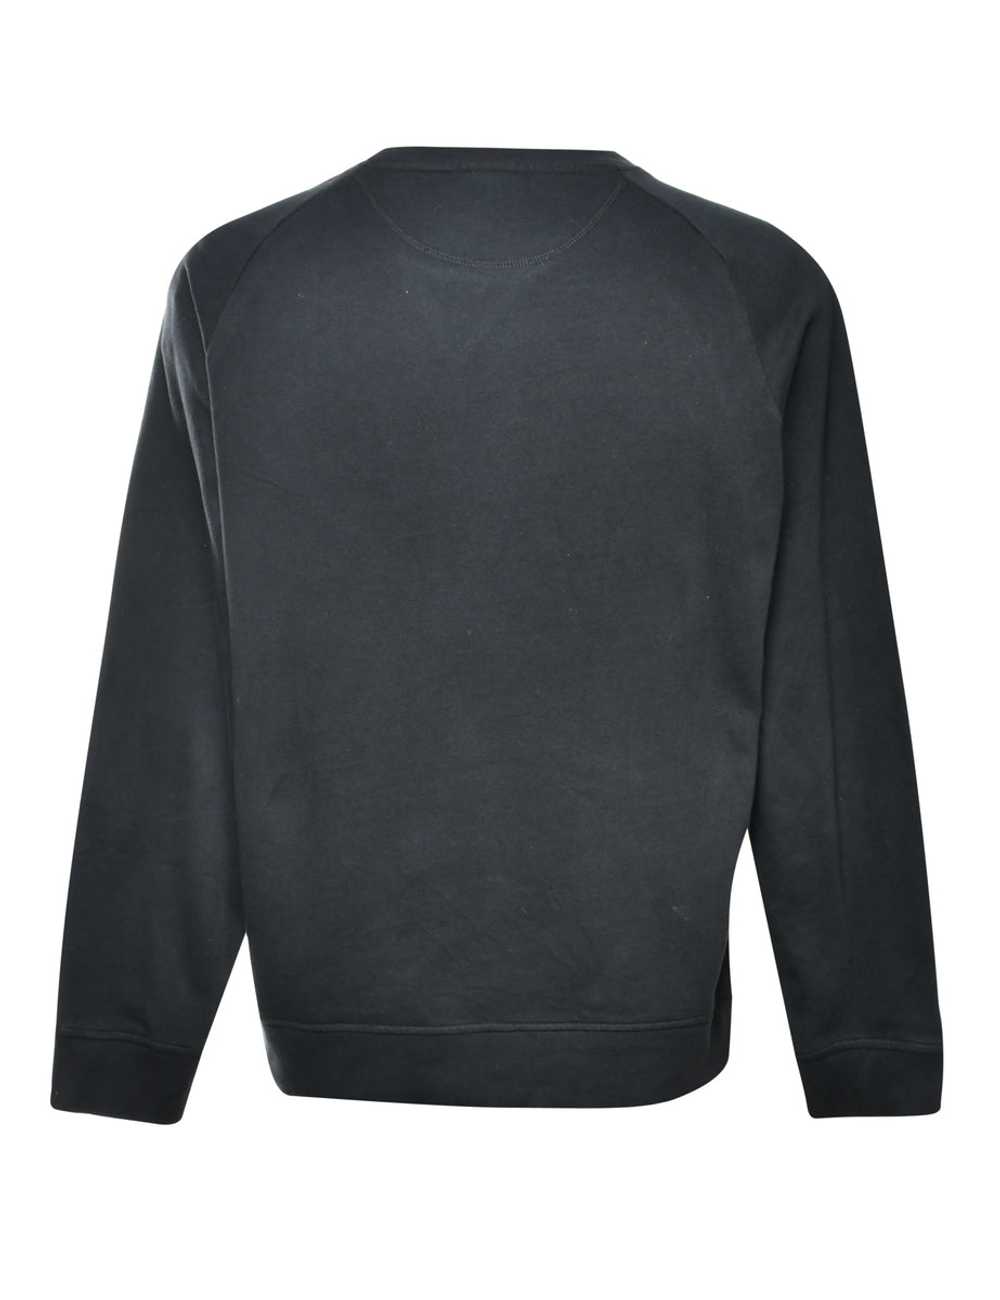 Reebok Plain Sweatshirt - S - image 2